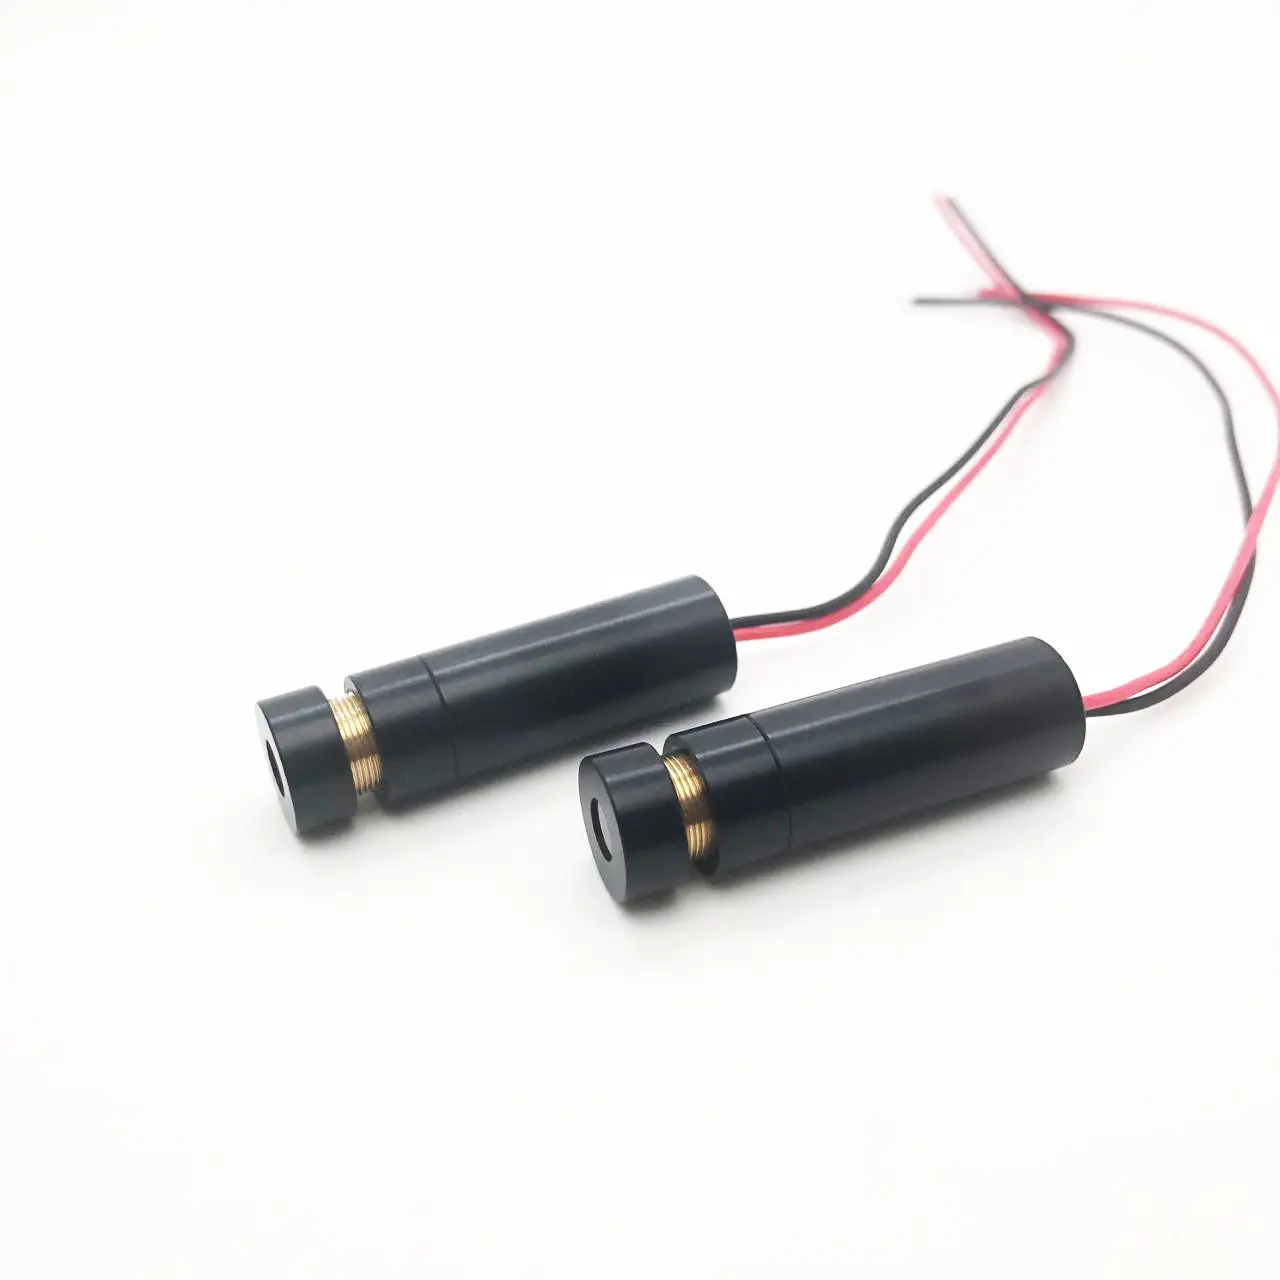 Red Green Blue Line Laser Module Focus Adjustable 12x42mm Positioning Alignment Laser Targeting Devices Measurement